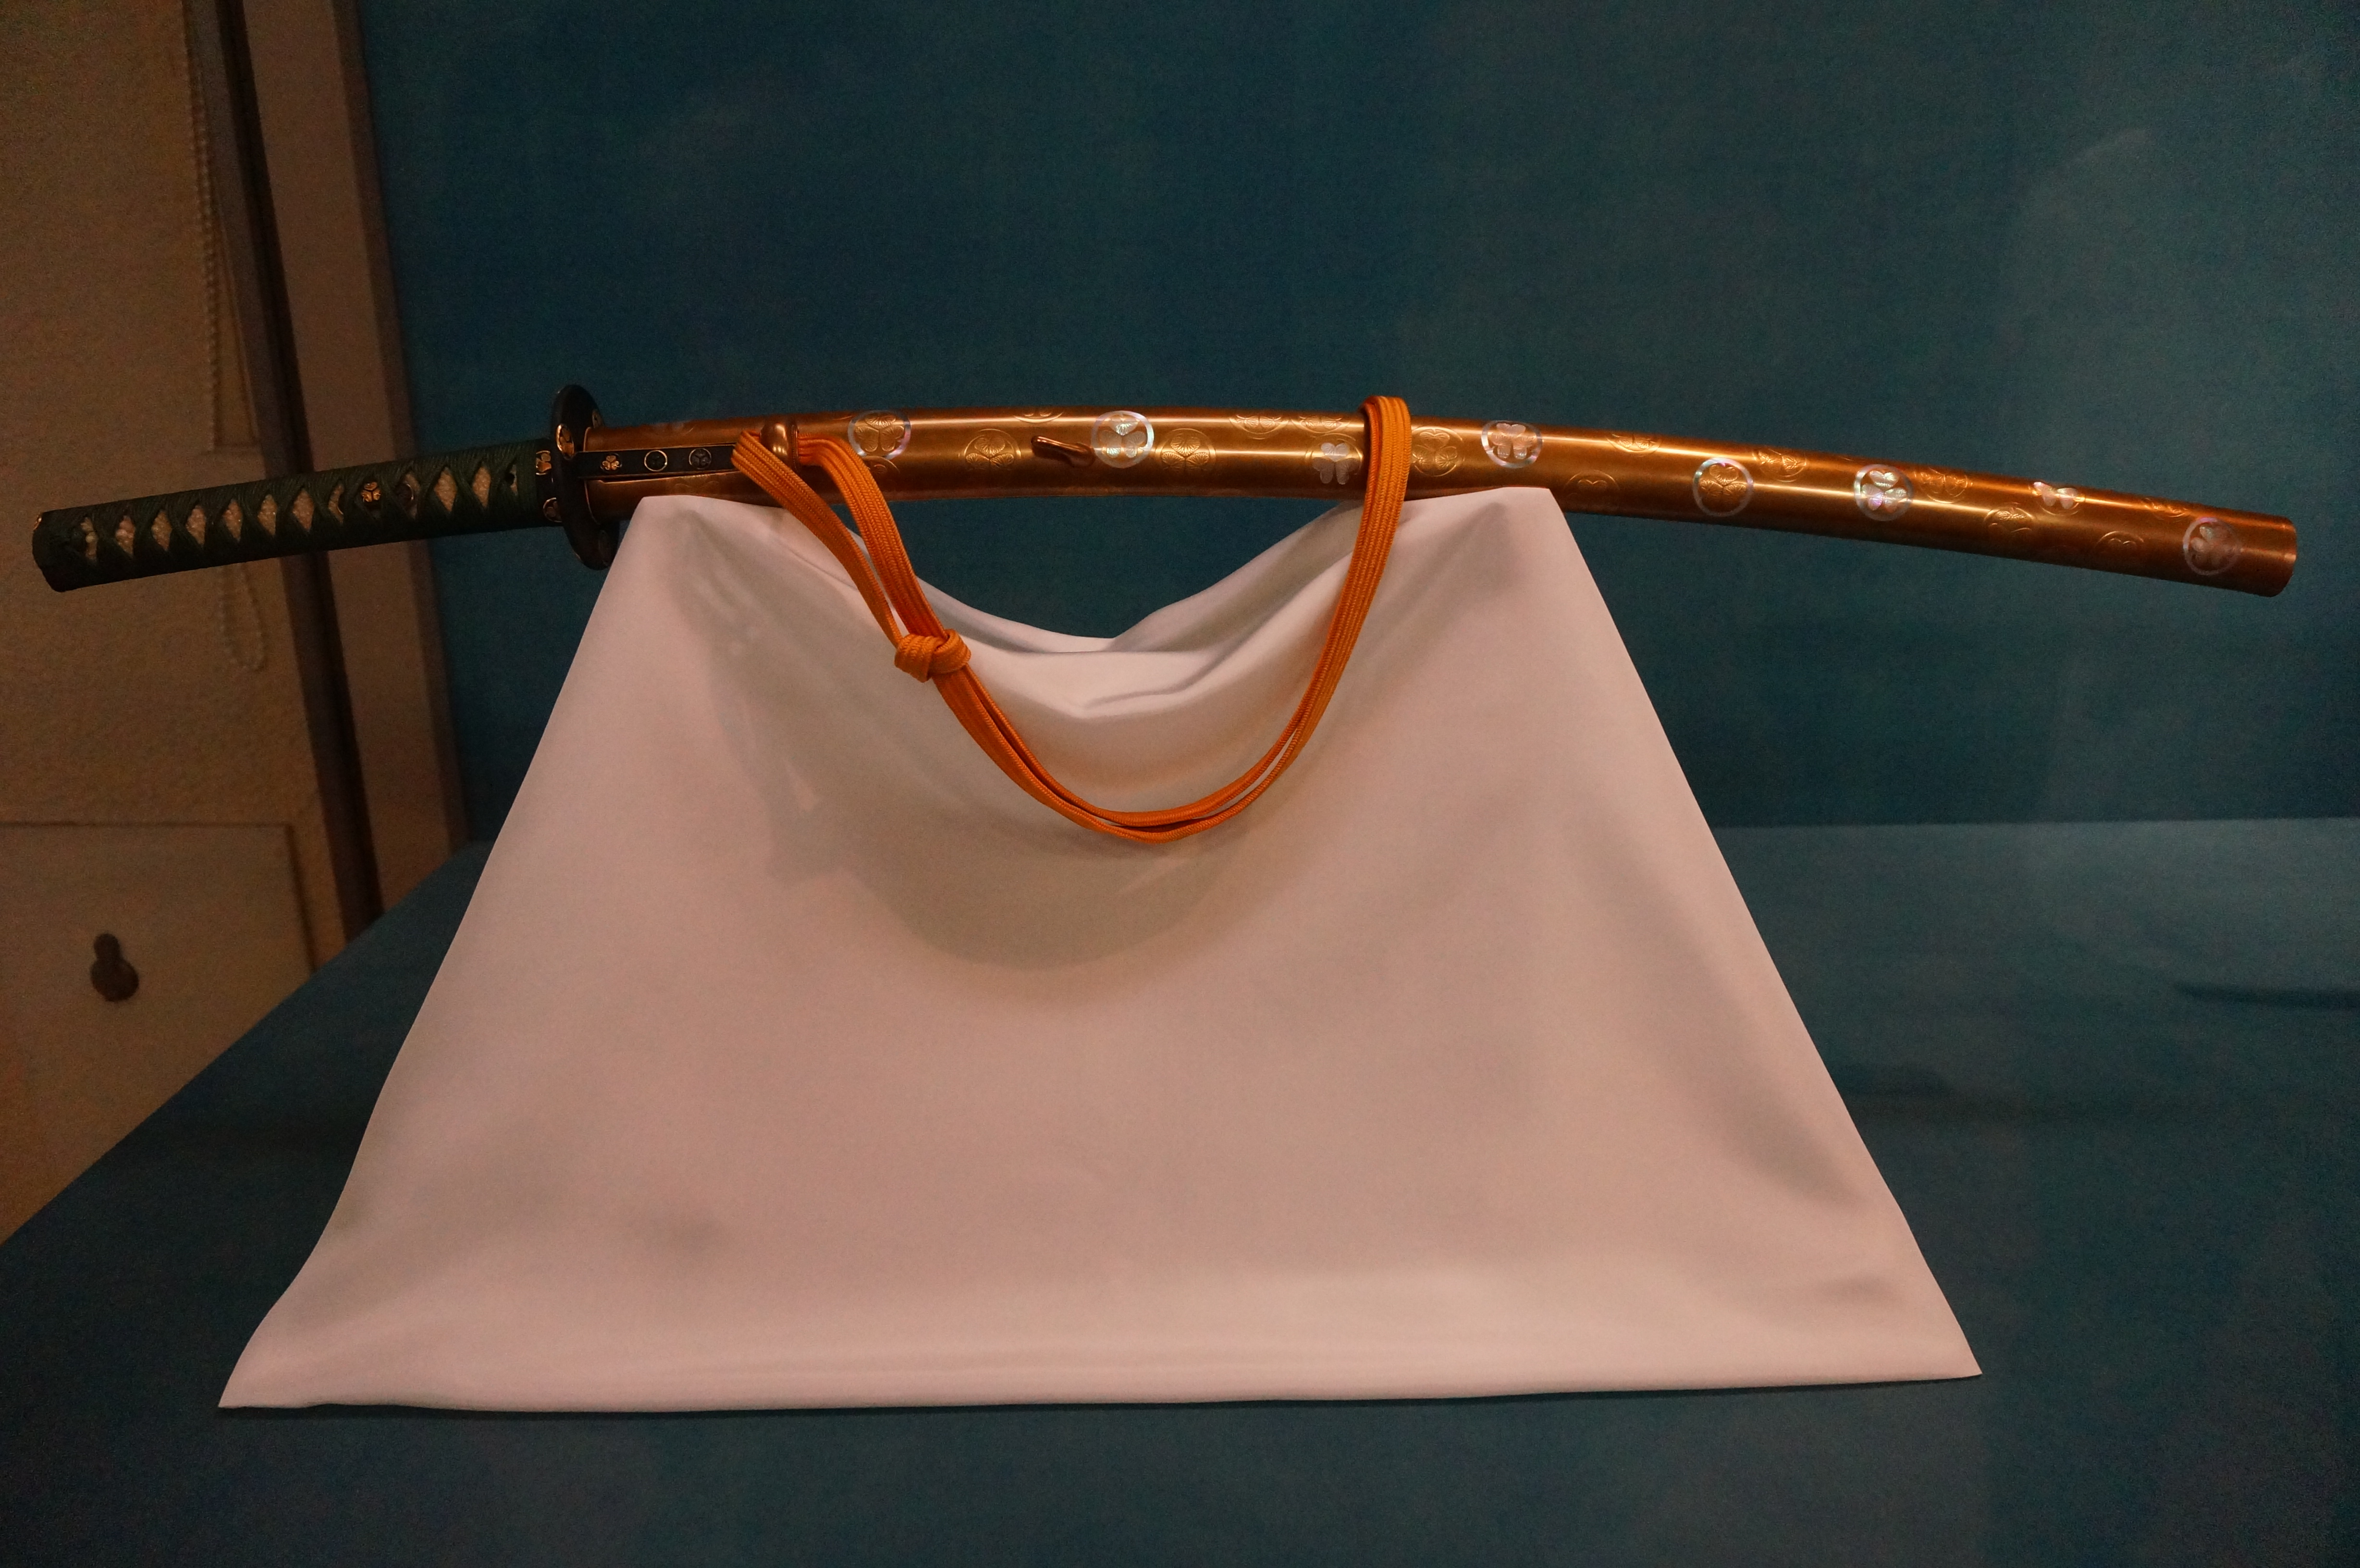 File:沃懸地葵紋螺鈿蒔絵打刀, Katana-style mounting attached to a 